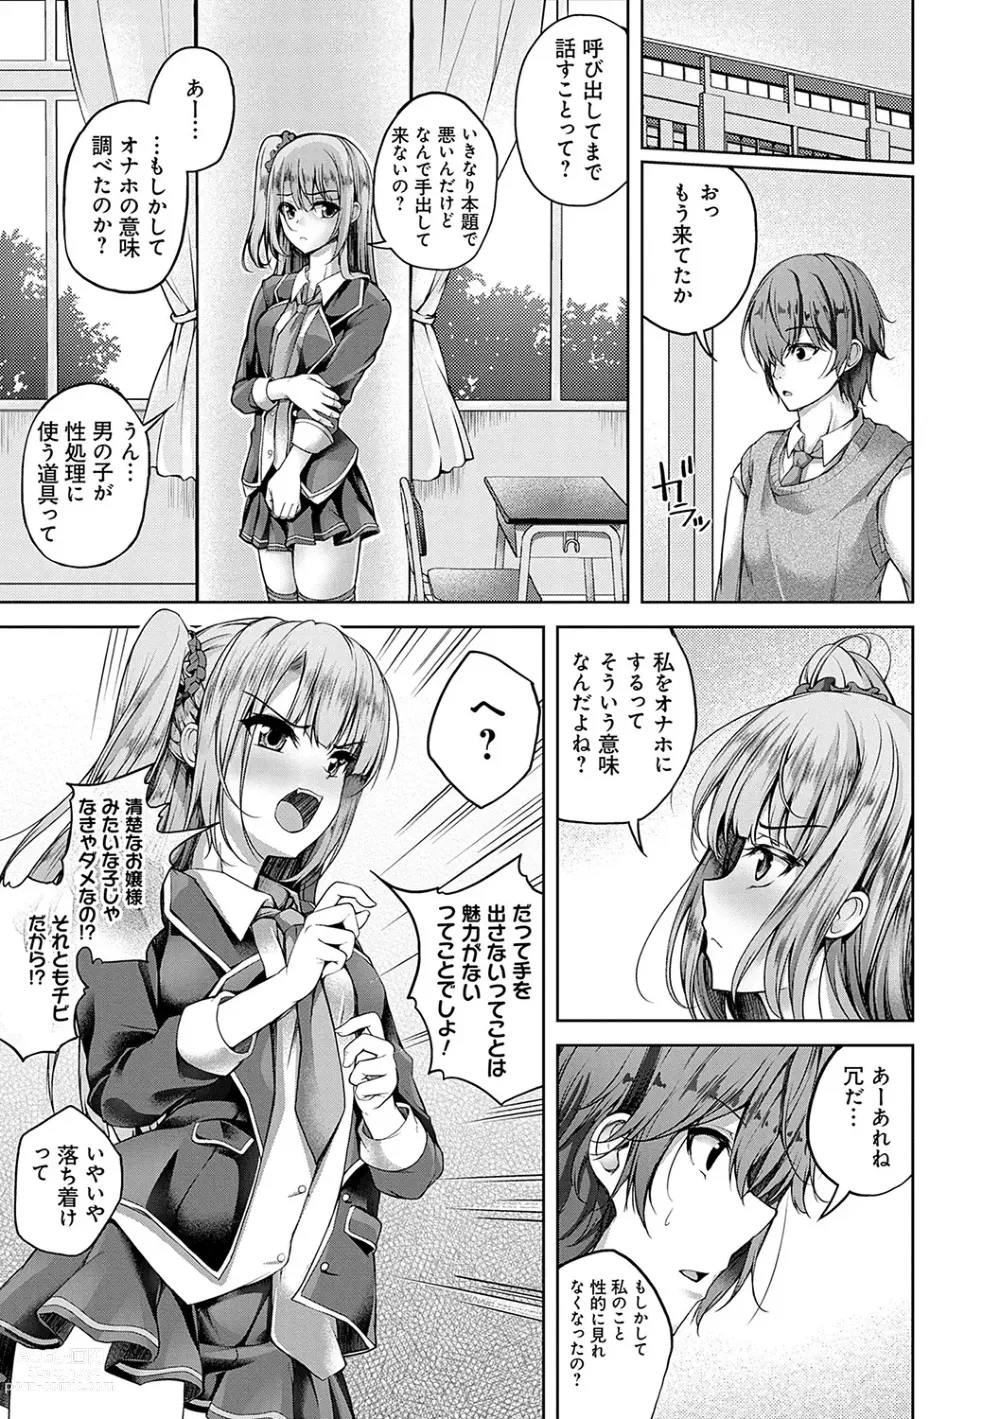 Page 8 of manga Koibana Fubuki